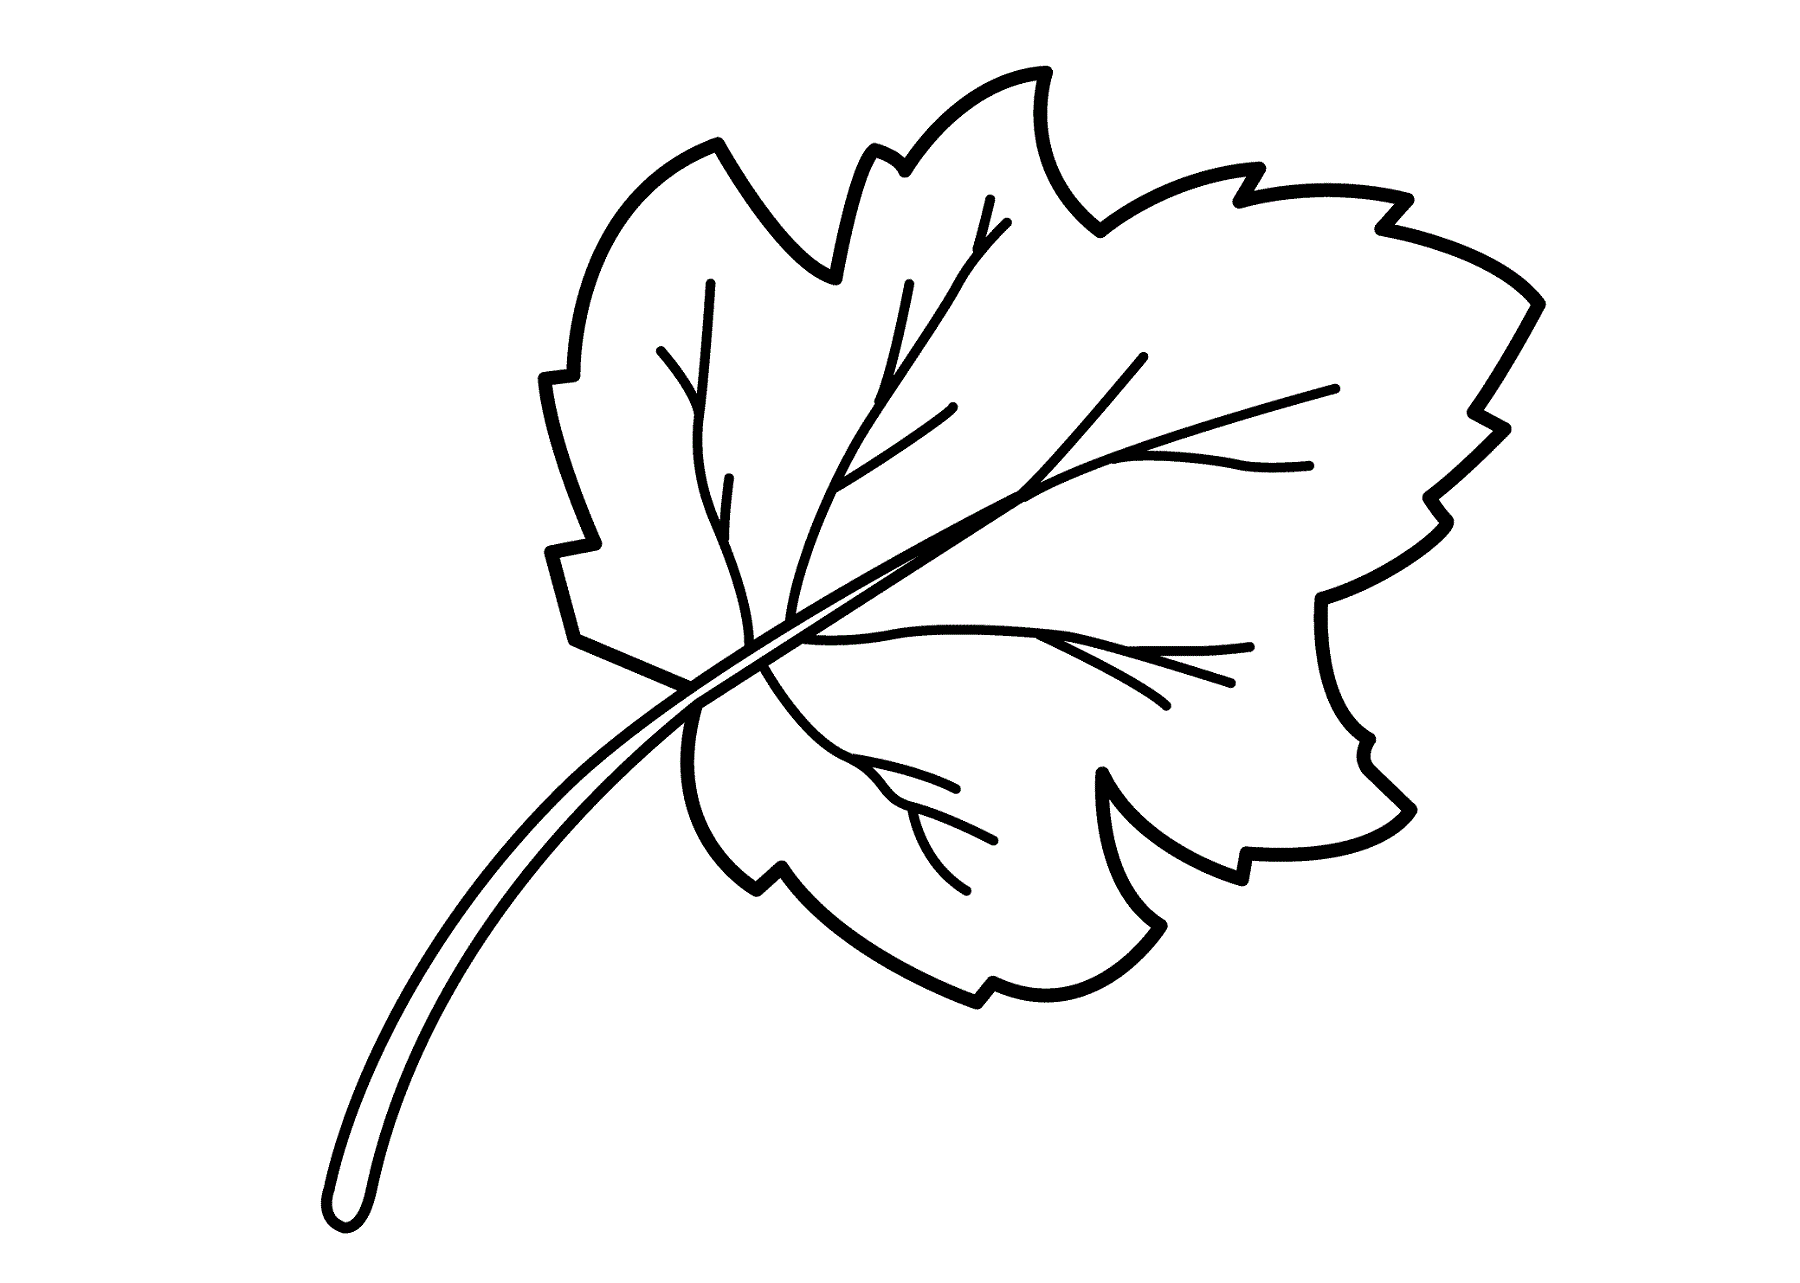 Leaf drawing for kids [4 STEPS] -ASHISH EDITZ